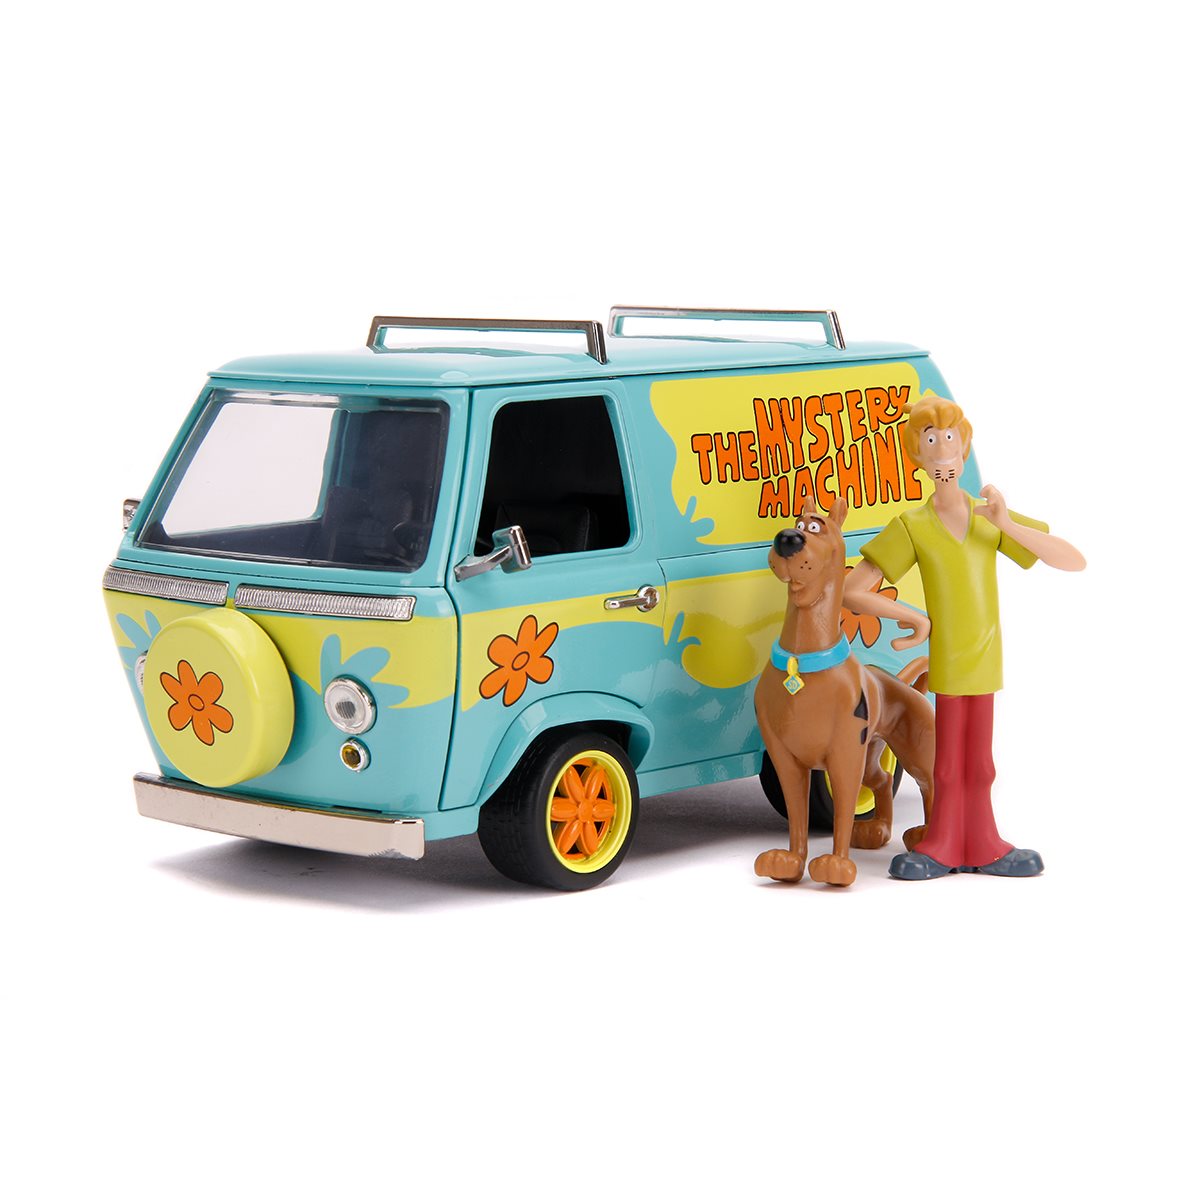 Scoobydoo scoob! mystery machine vehicle playset inc 5 shaggy figure